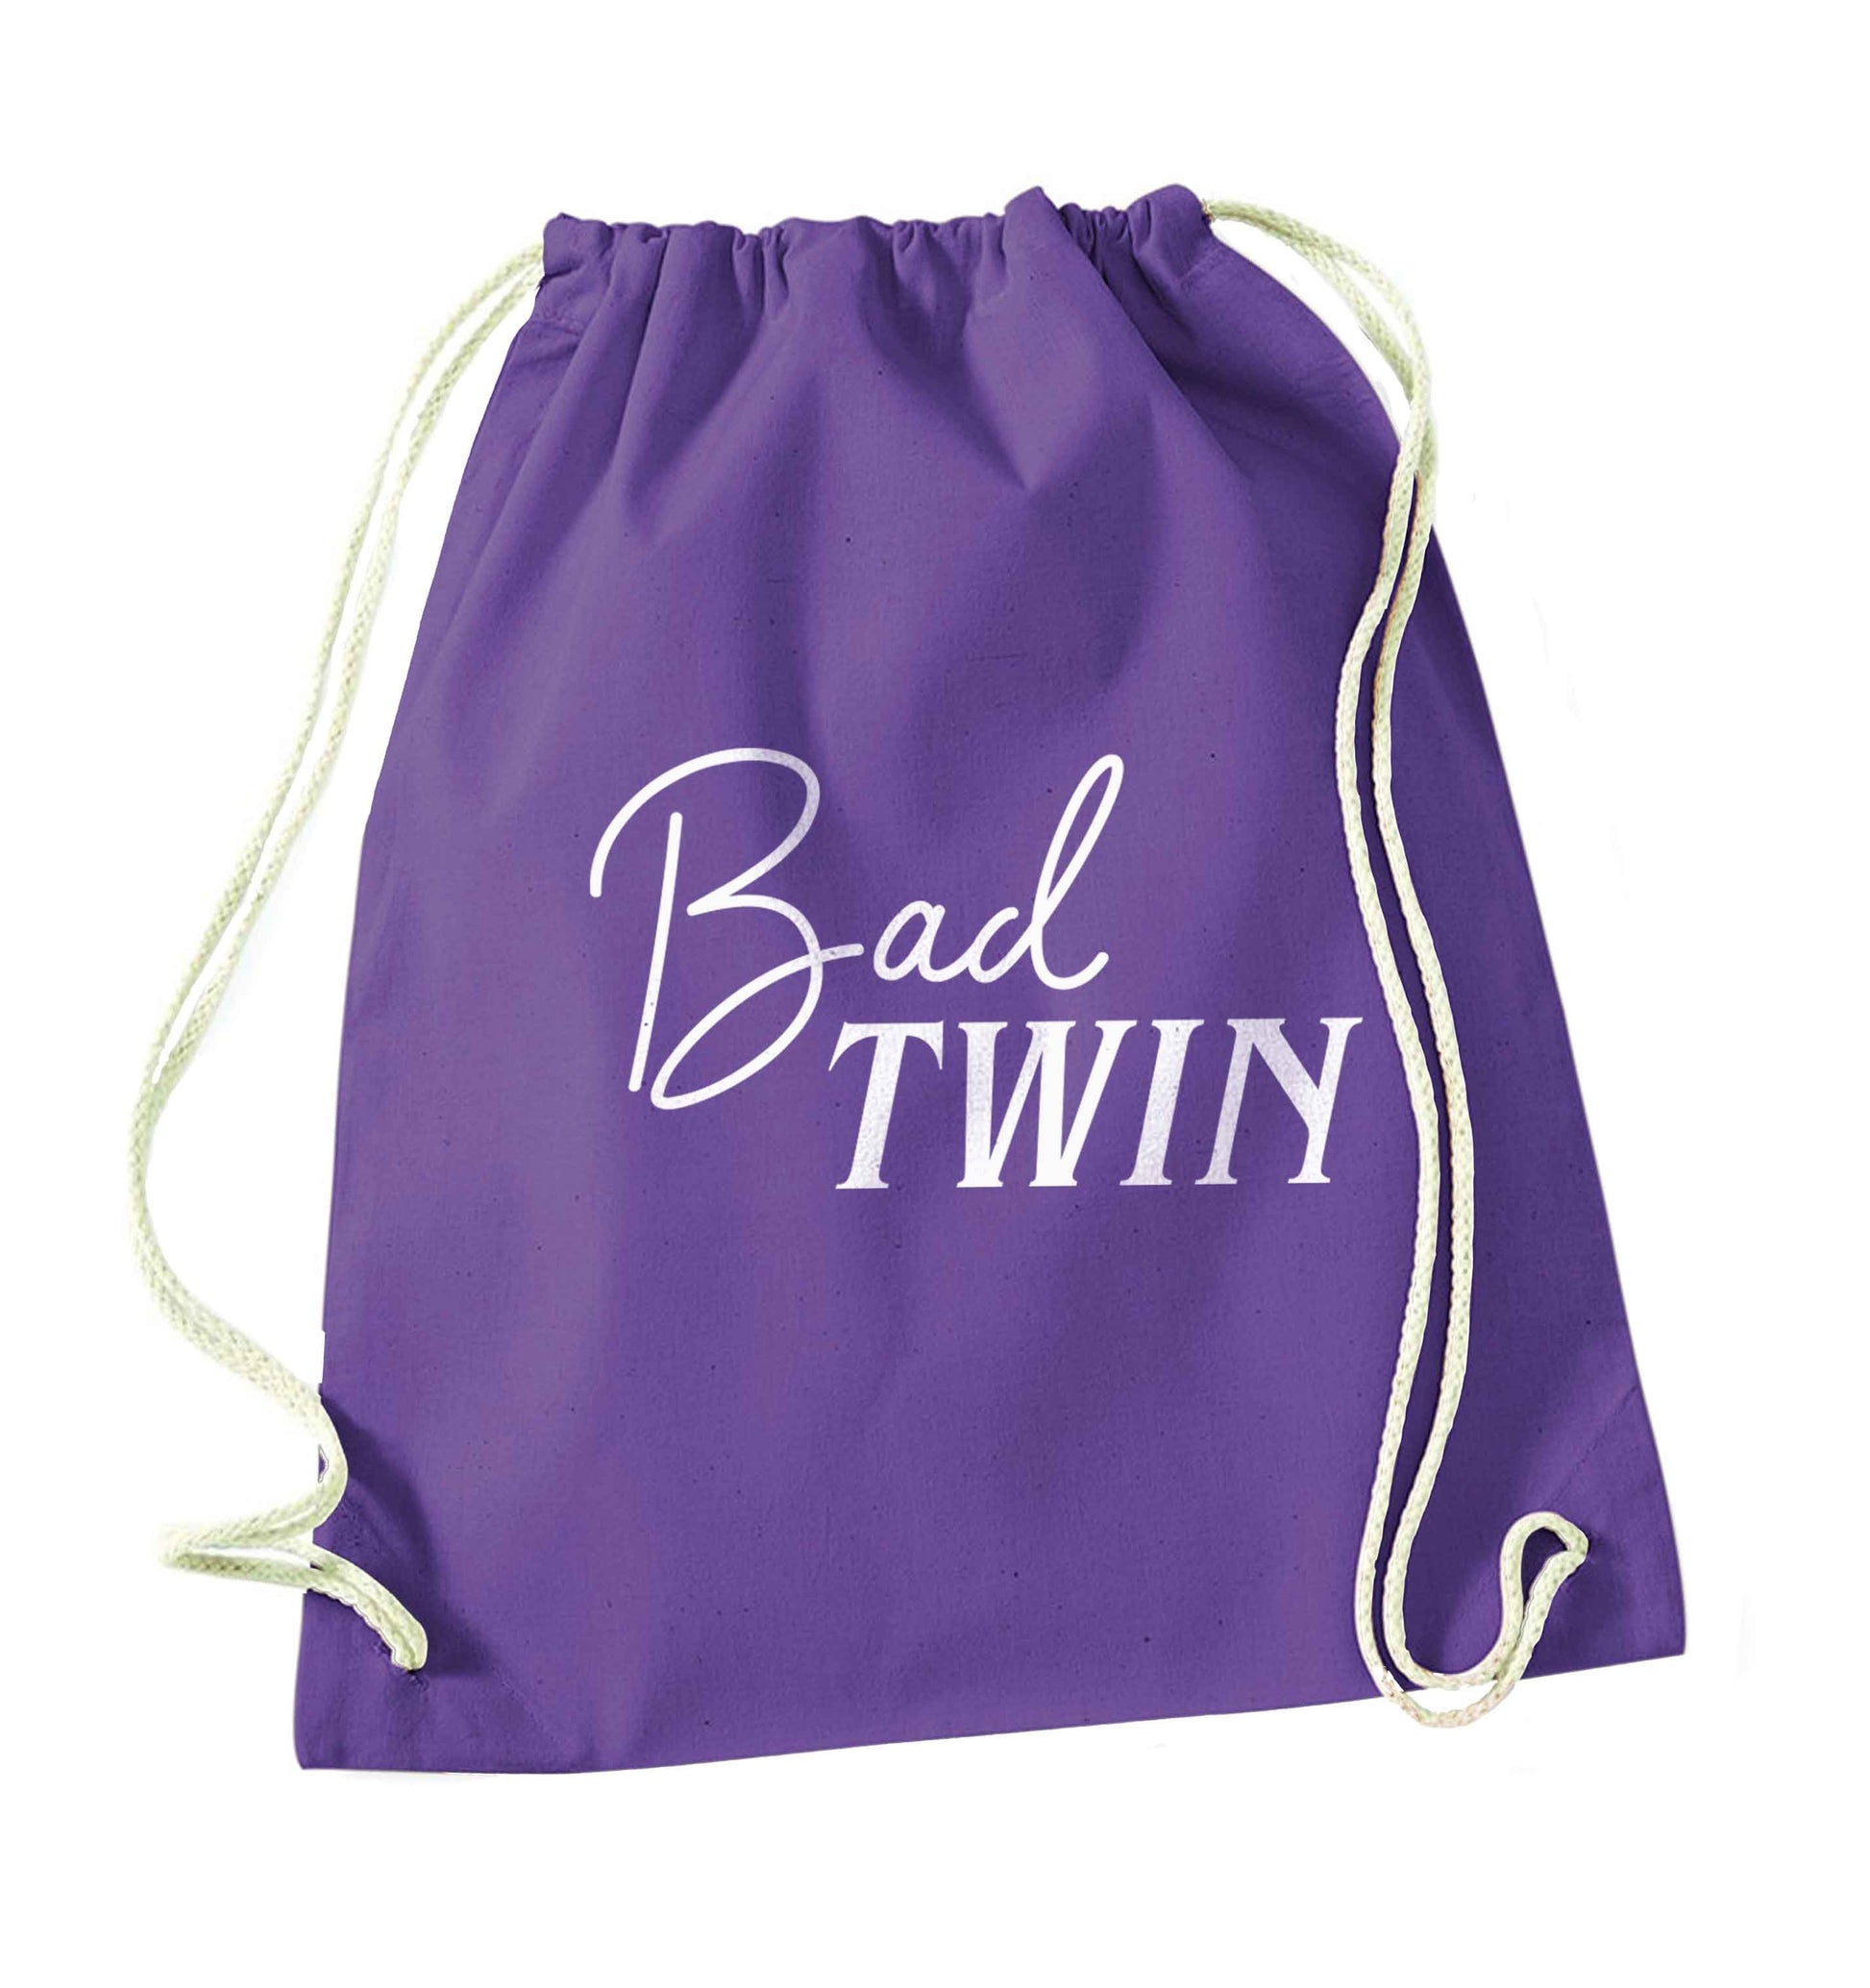 Bad twin purple drawstring bag